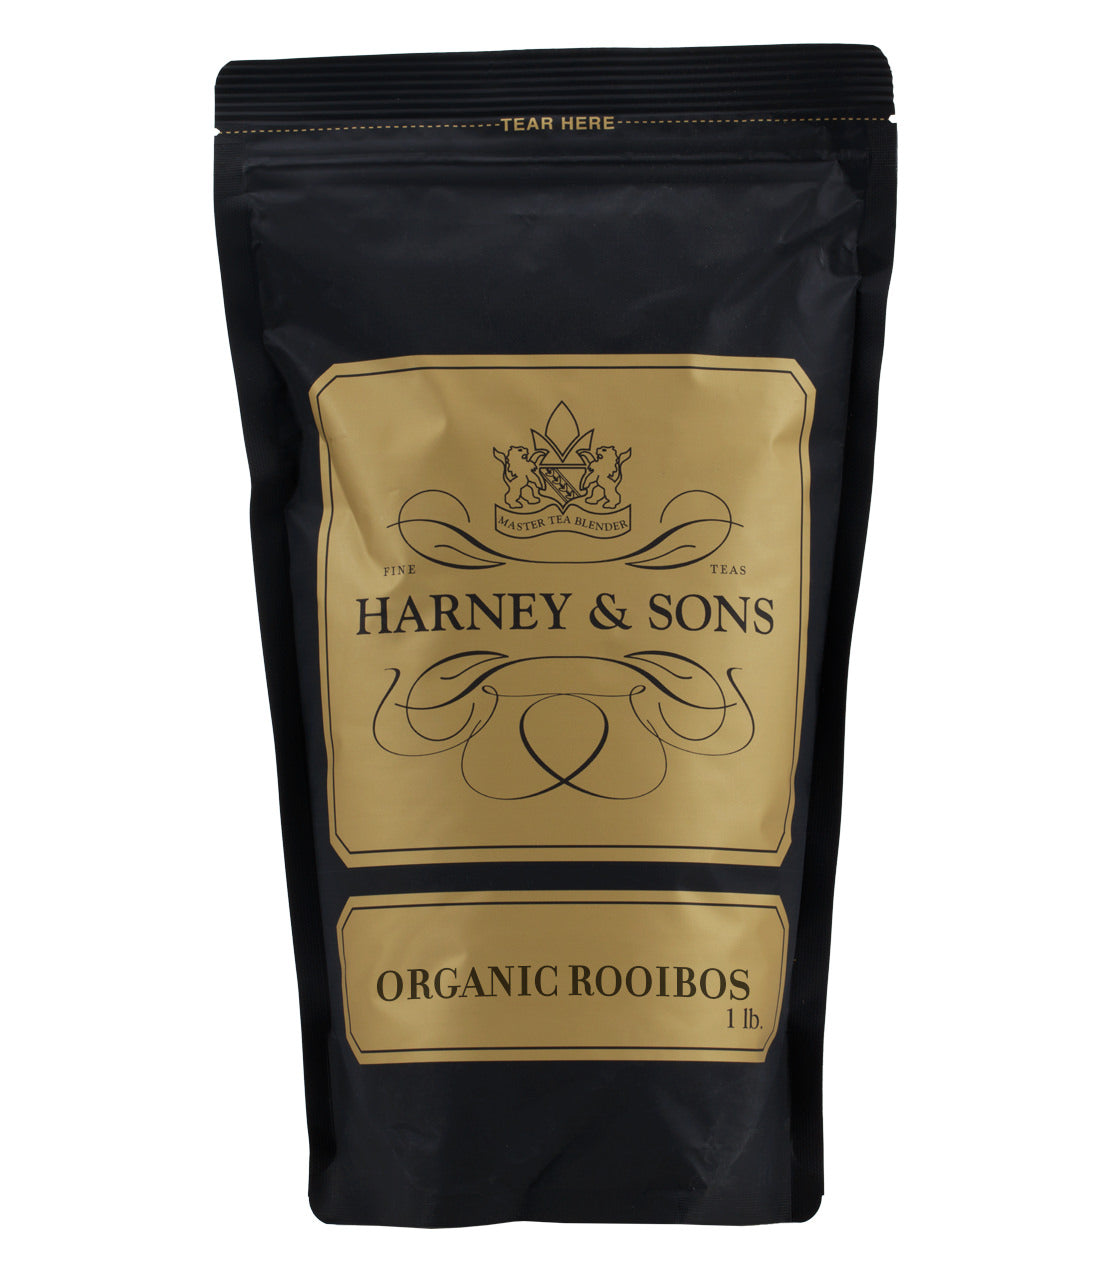 Organic Rooibos - Loose 1 lb. Bag - Harney & Sons Fine Teas